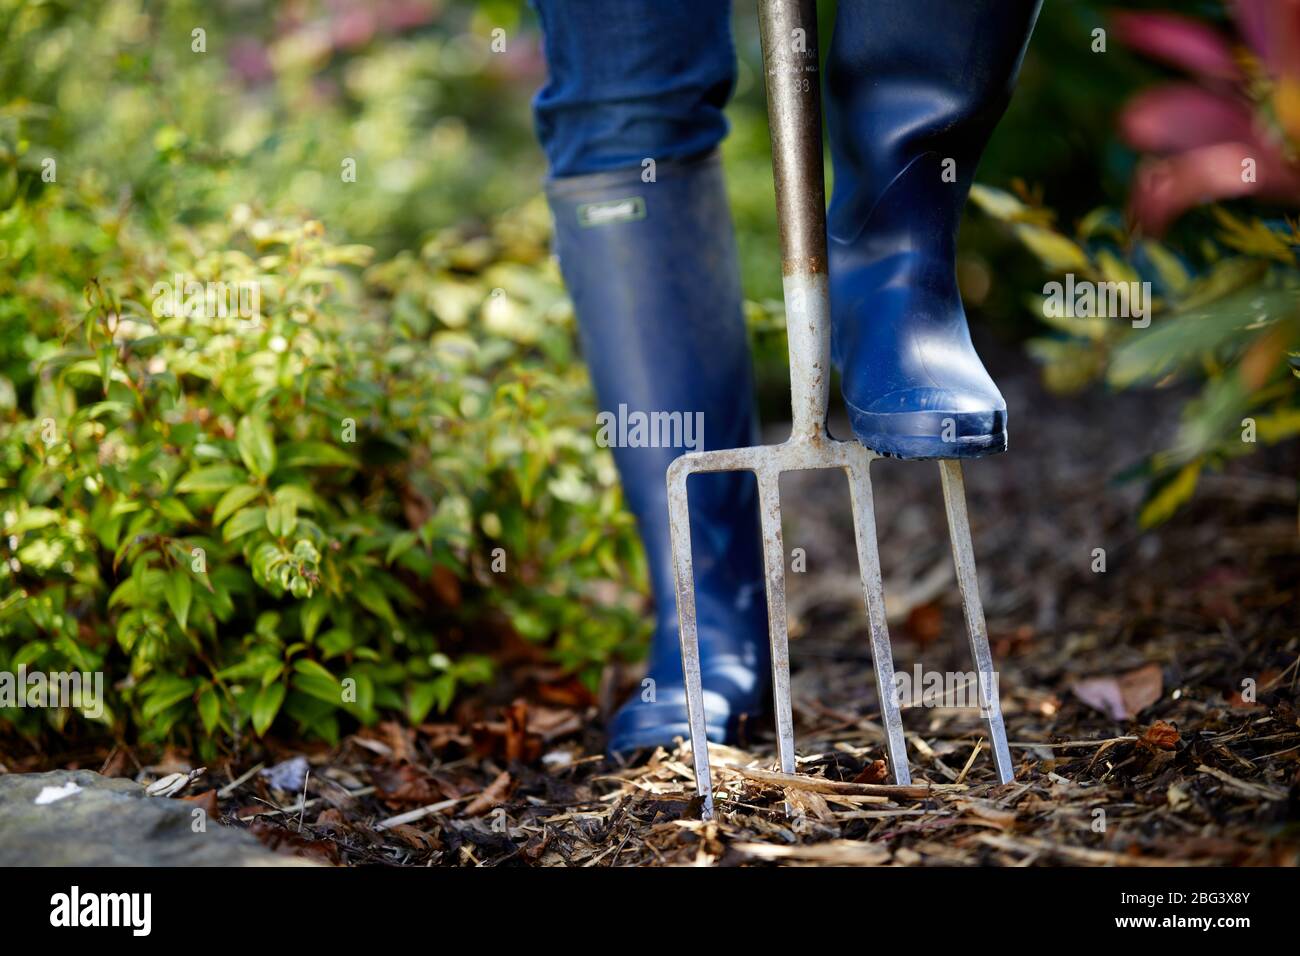 Woman gardening Stock Photo